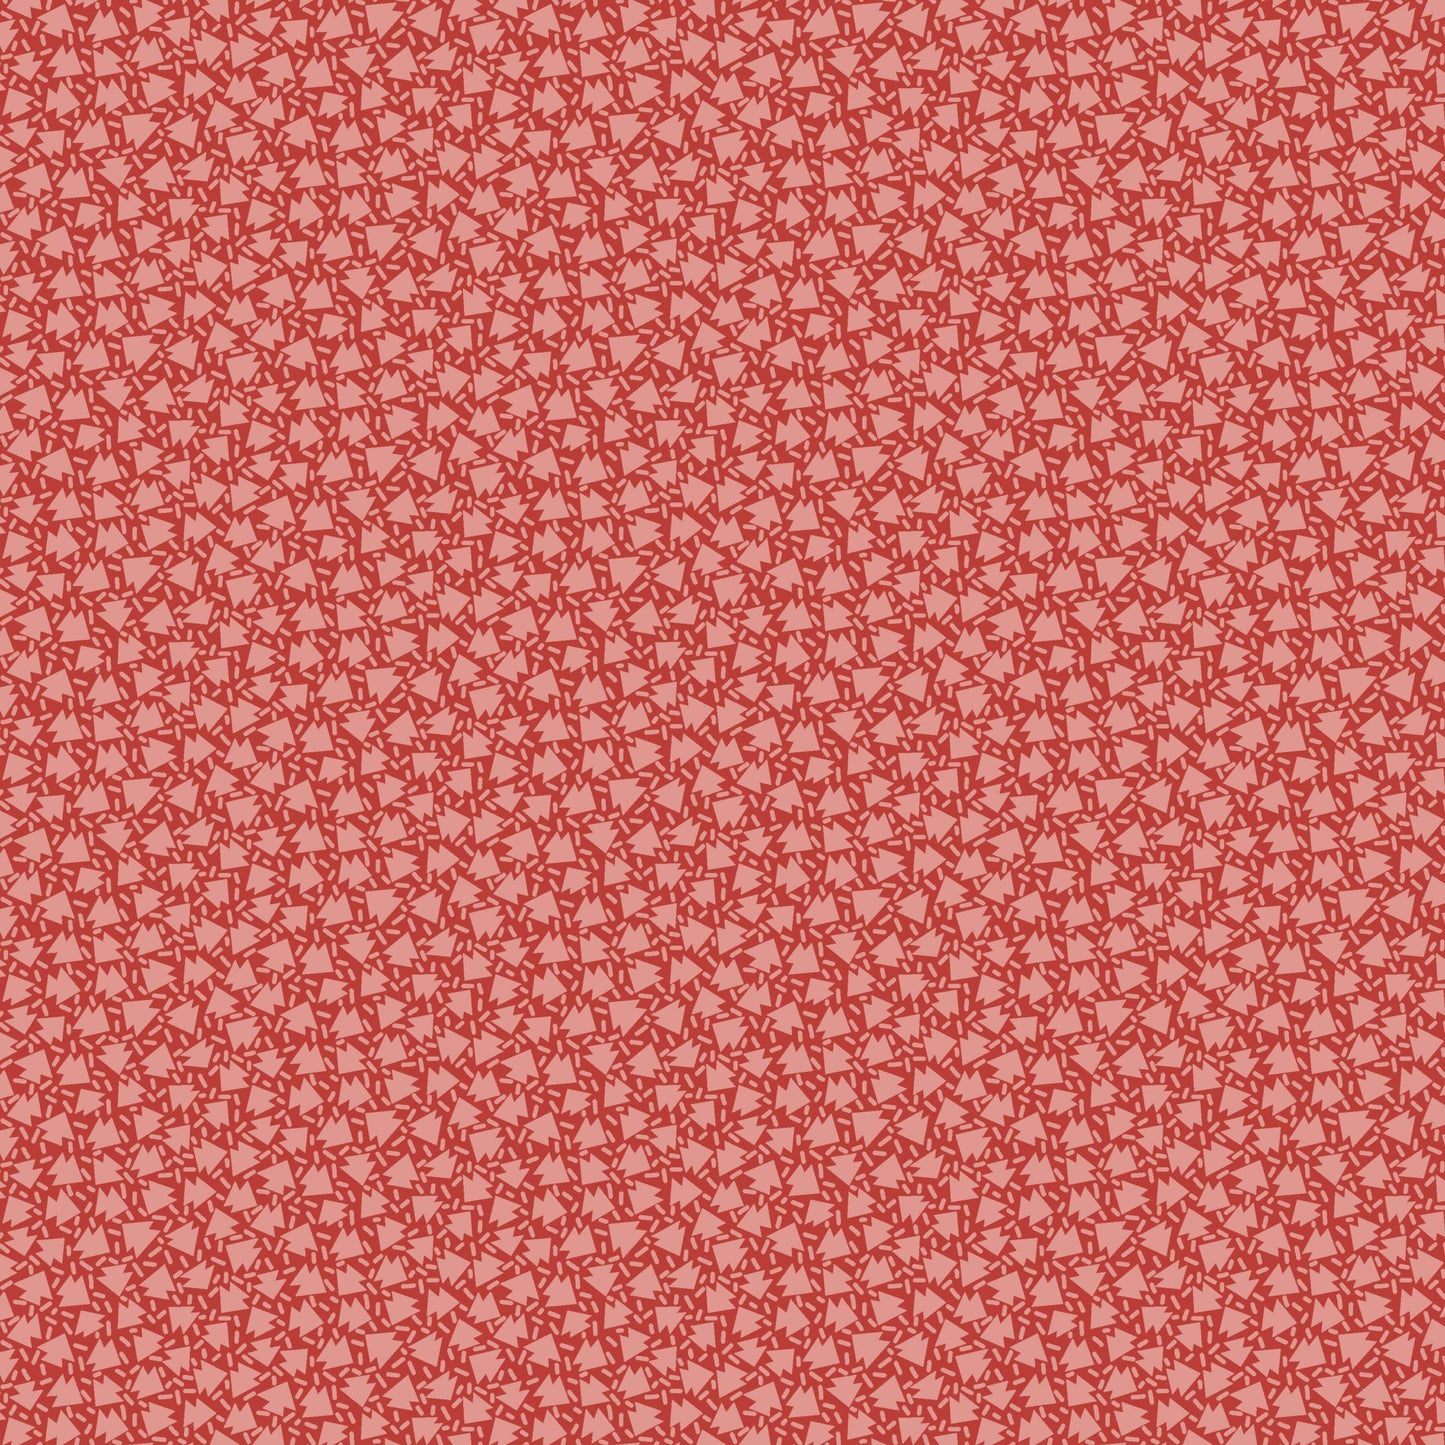 Makower Christmas Fabric Retro HoHo Tree Sprinkles Red A581R